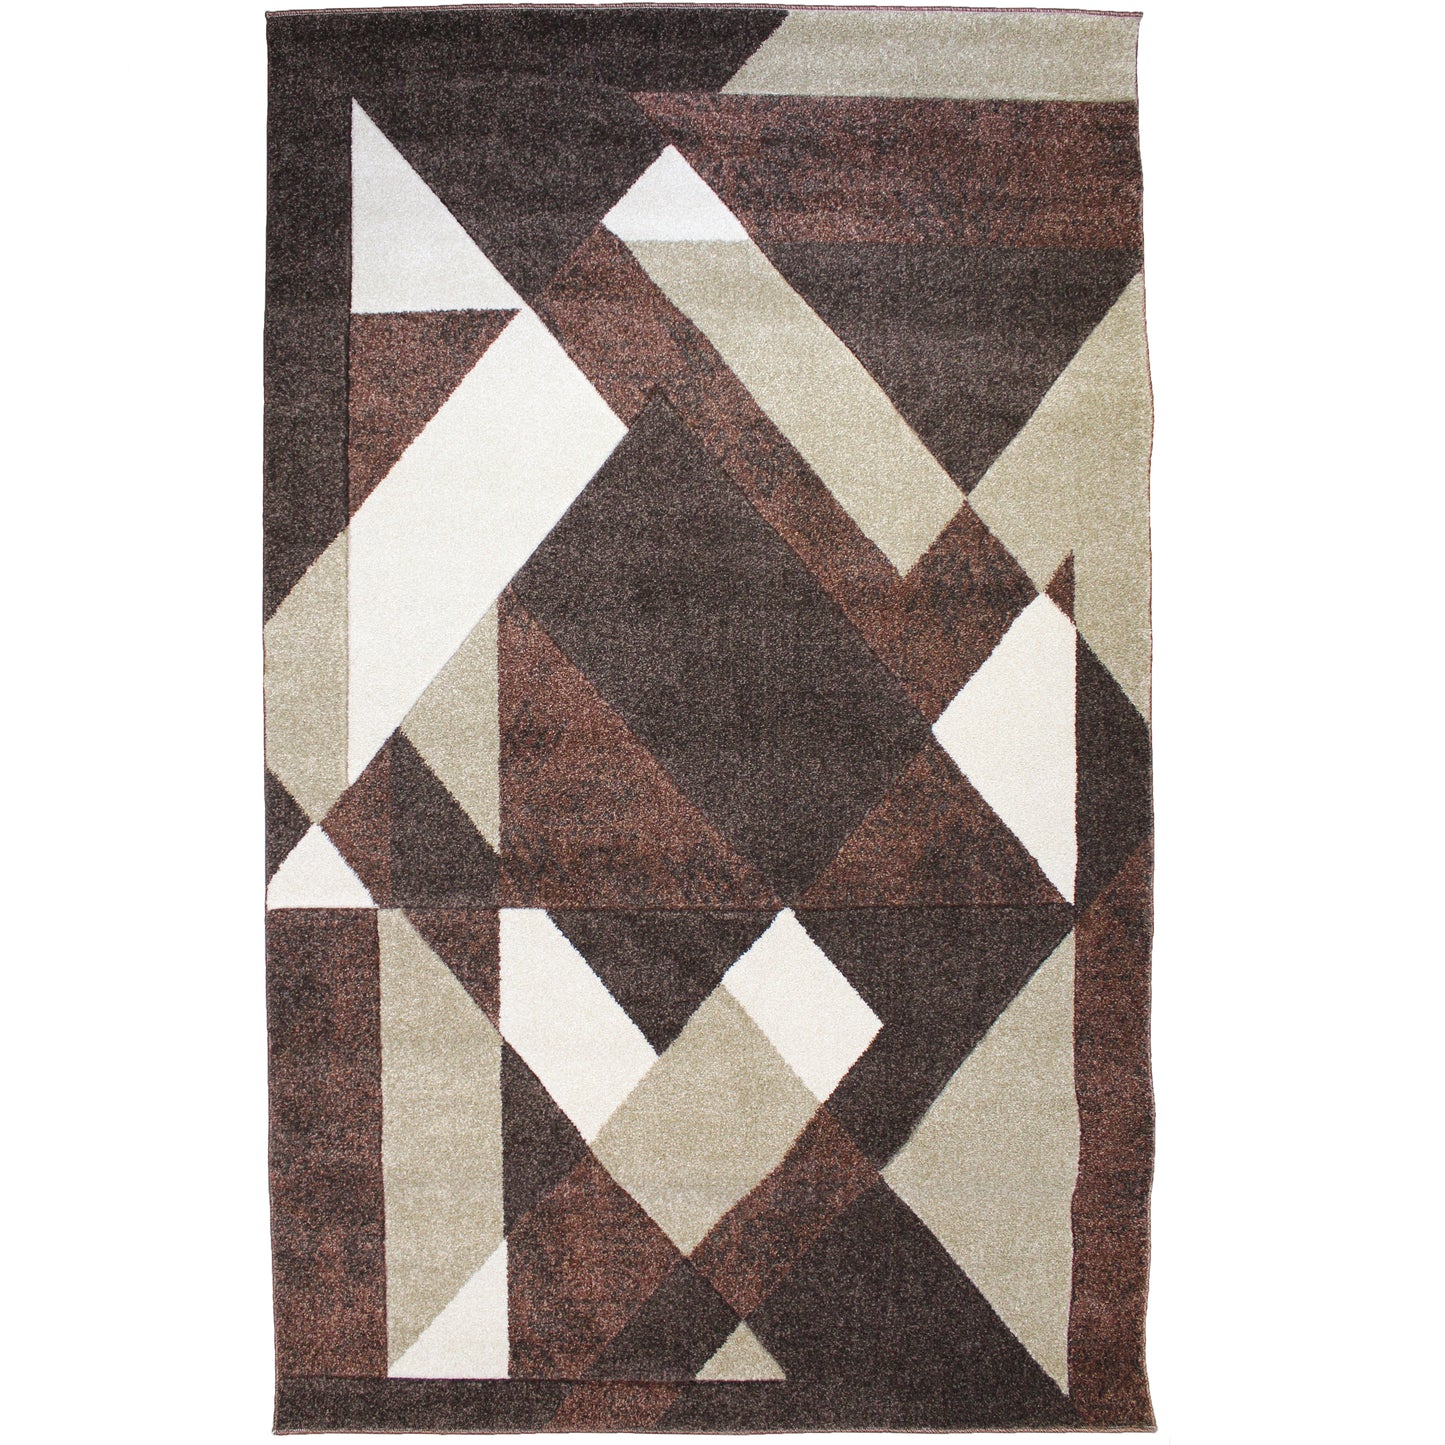 Natural Geo Jasmine Modern Geometric Abstract Chocolate/Brown Area Rug